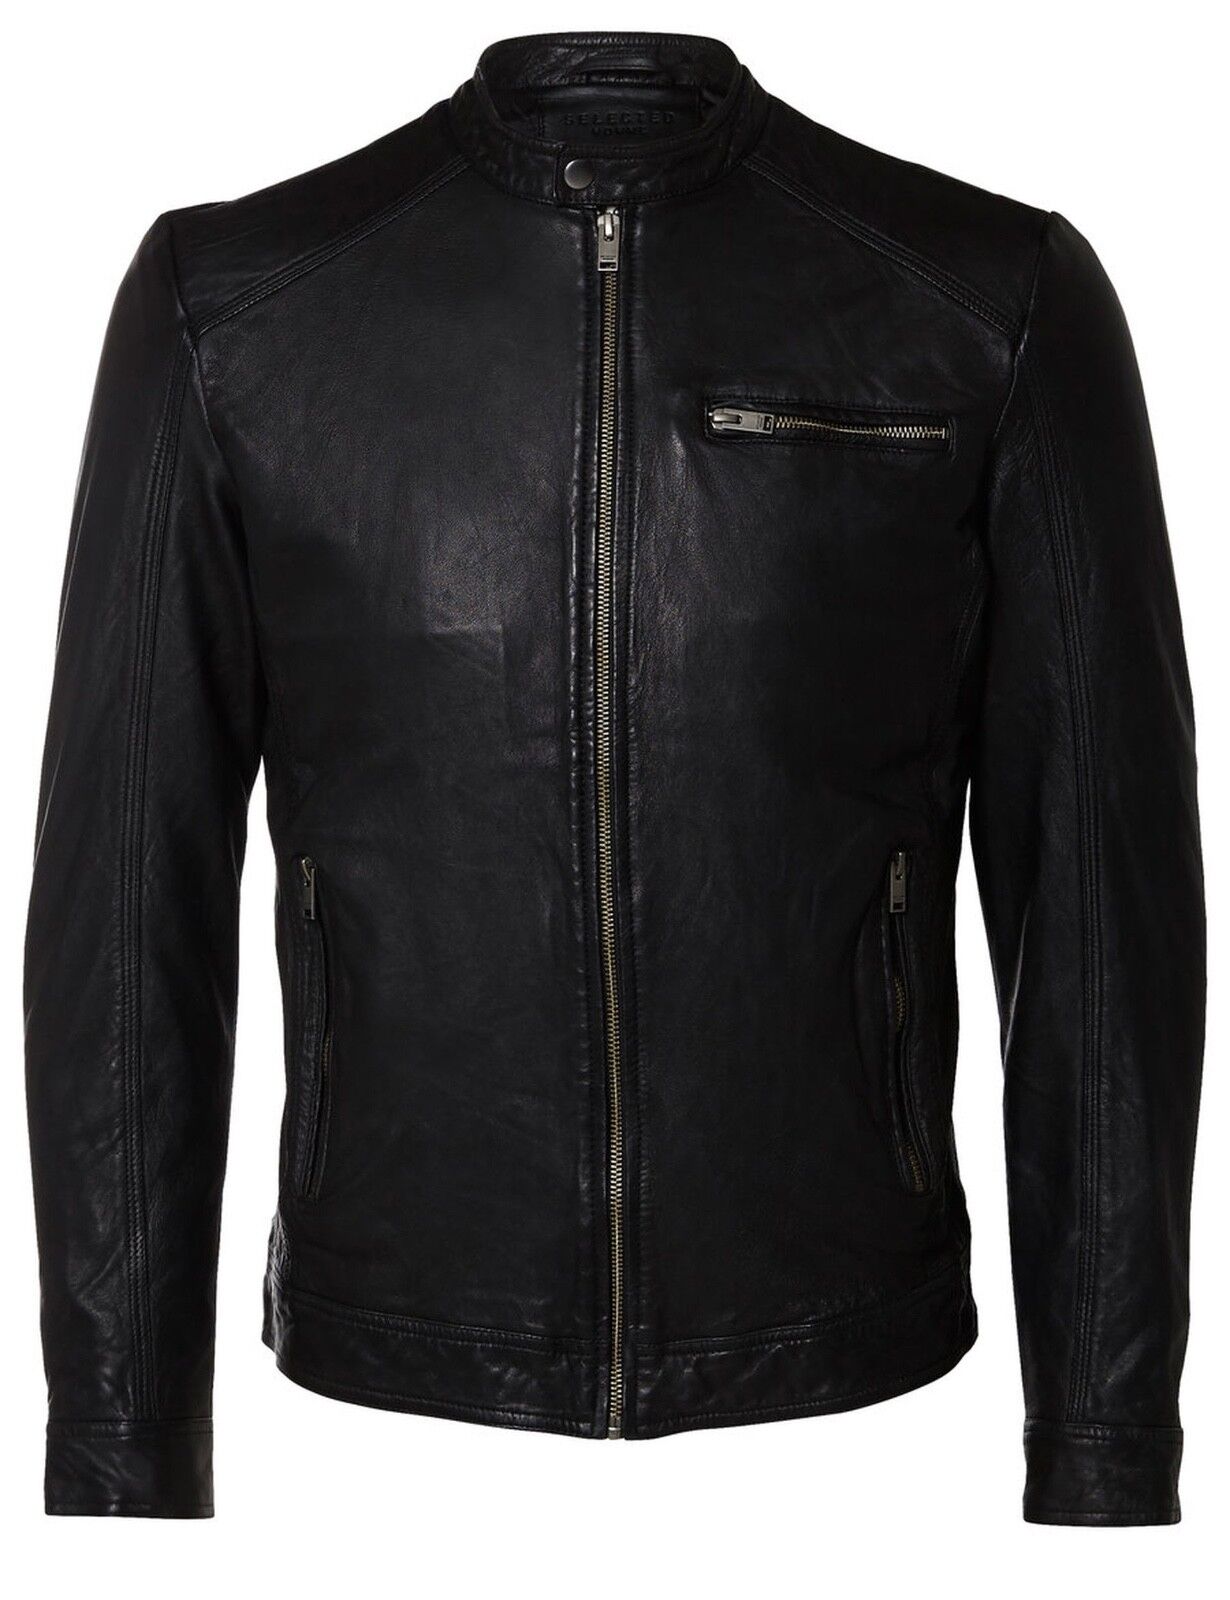 Selected SELECTED Homme Tylor Leather Jacket Short Fashion Bomber Biker Coat Black